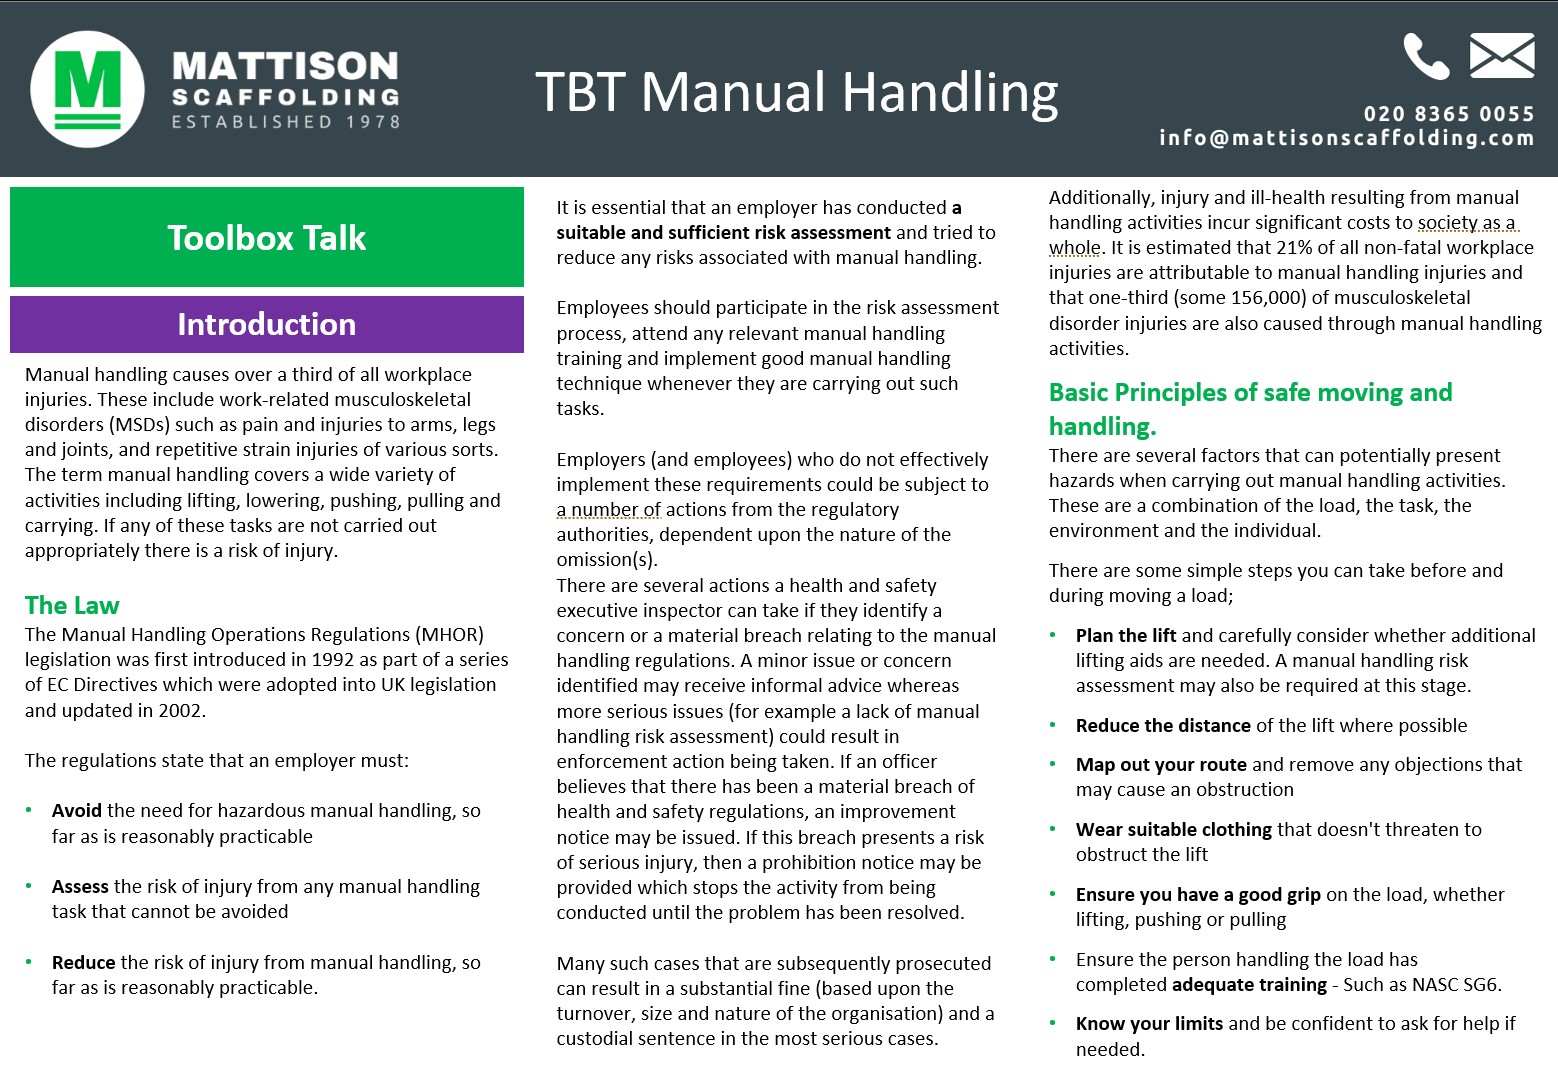 TBT Manual Handling 02.jpg